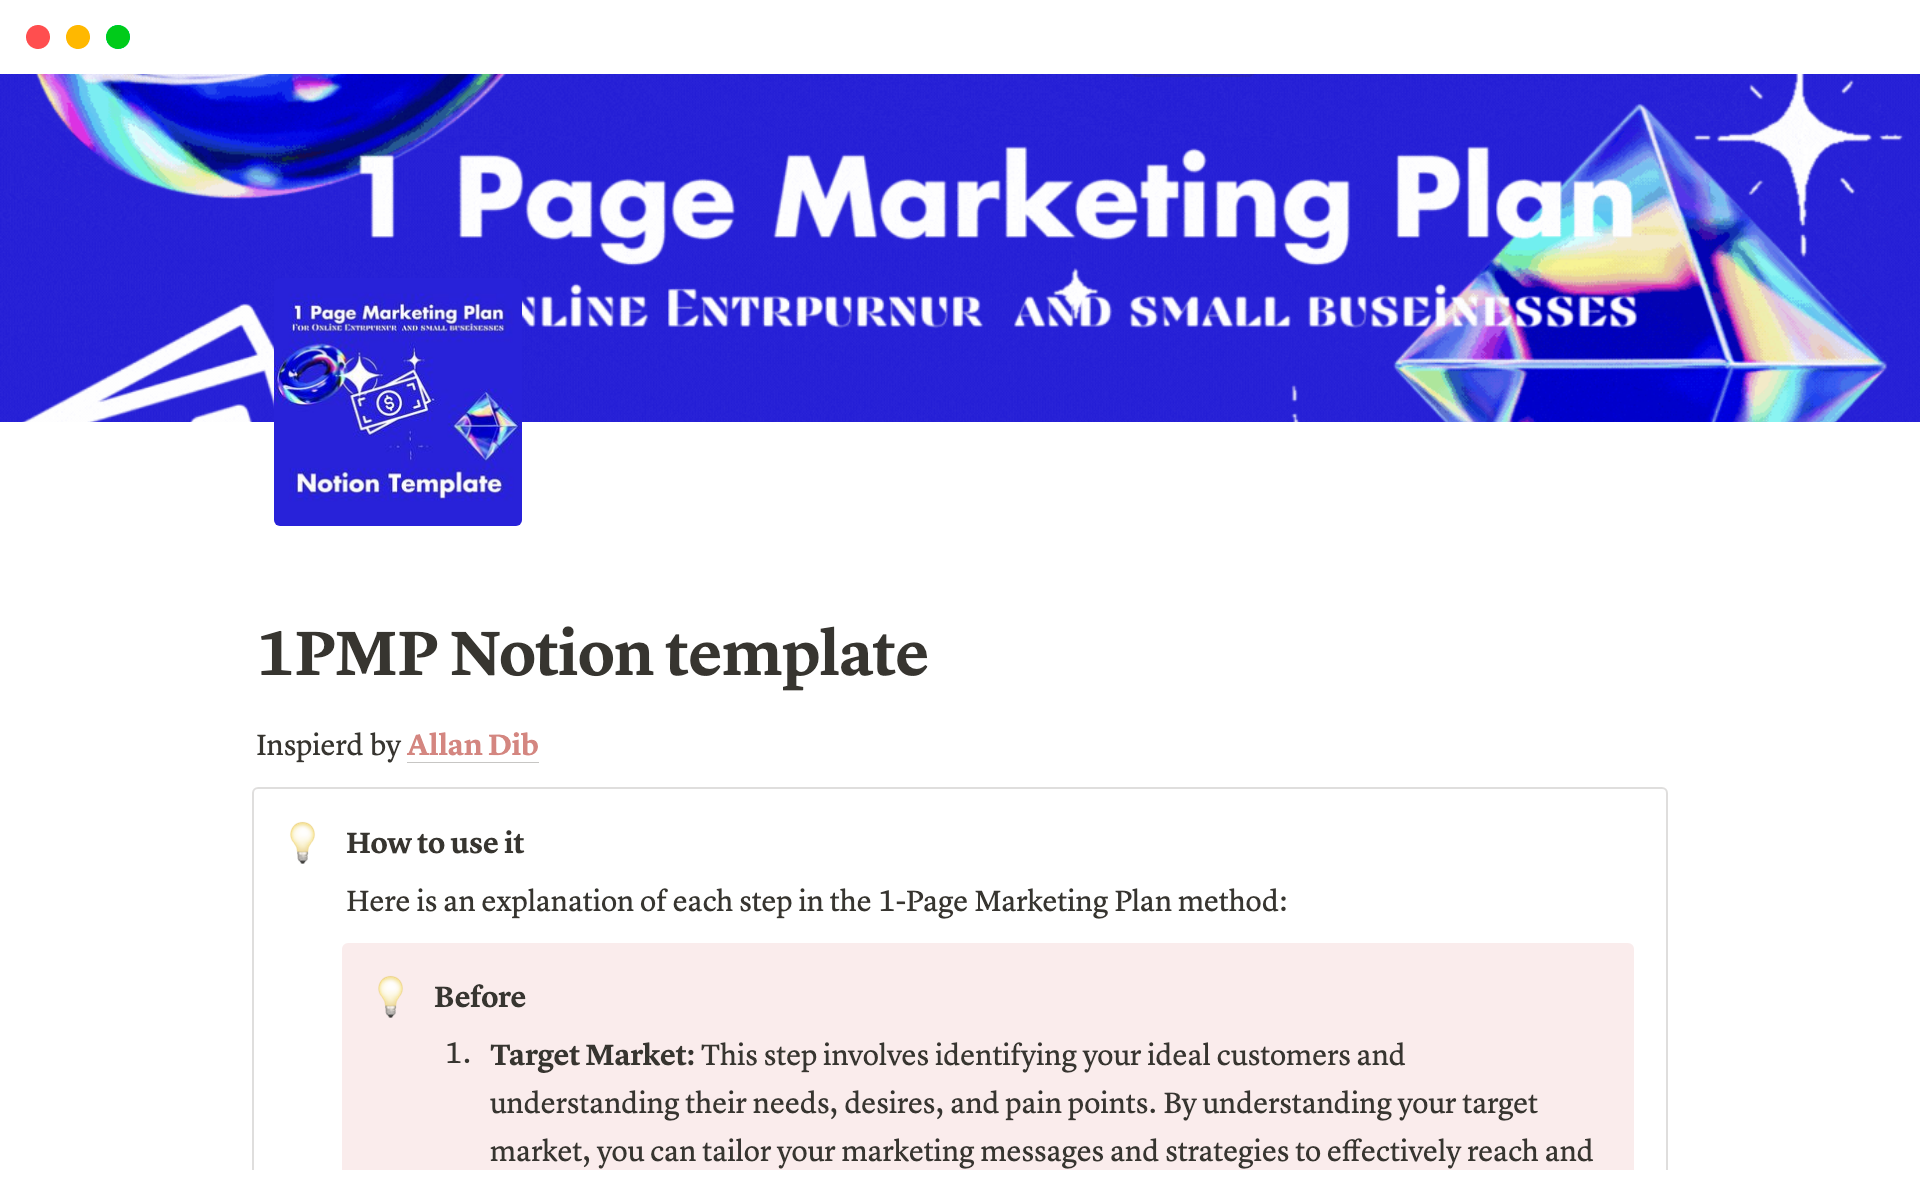 Uma prévia do modelo para MarketBoost: The Ultimate 1-Page Marketing Plan Notion Template for Small Online Businesses